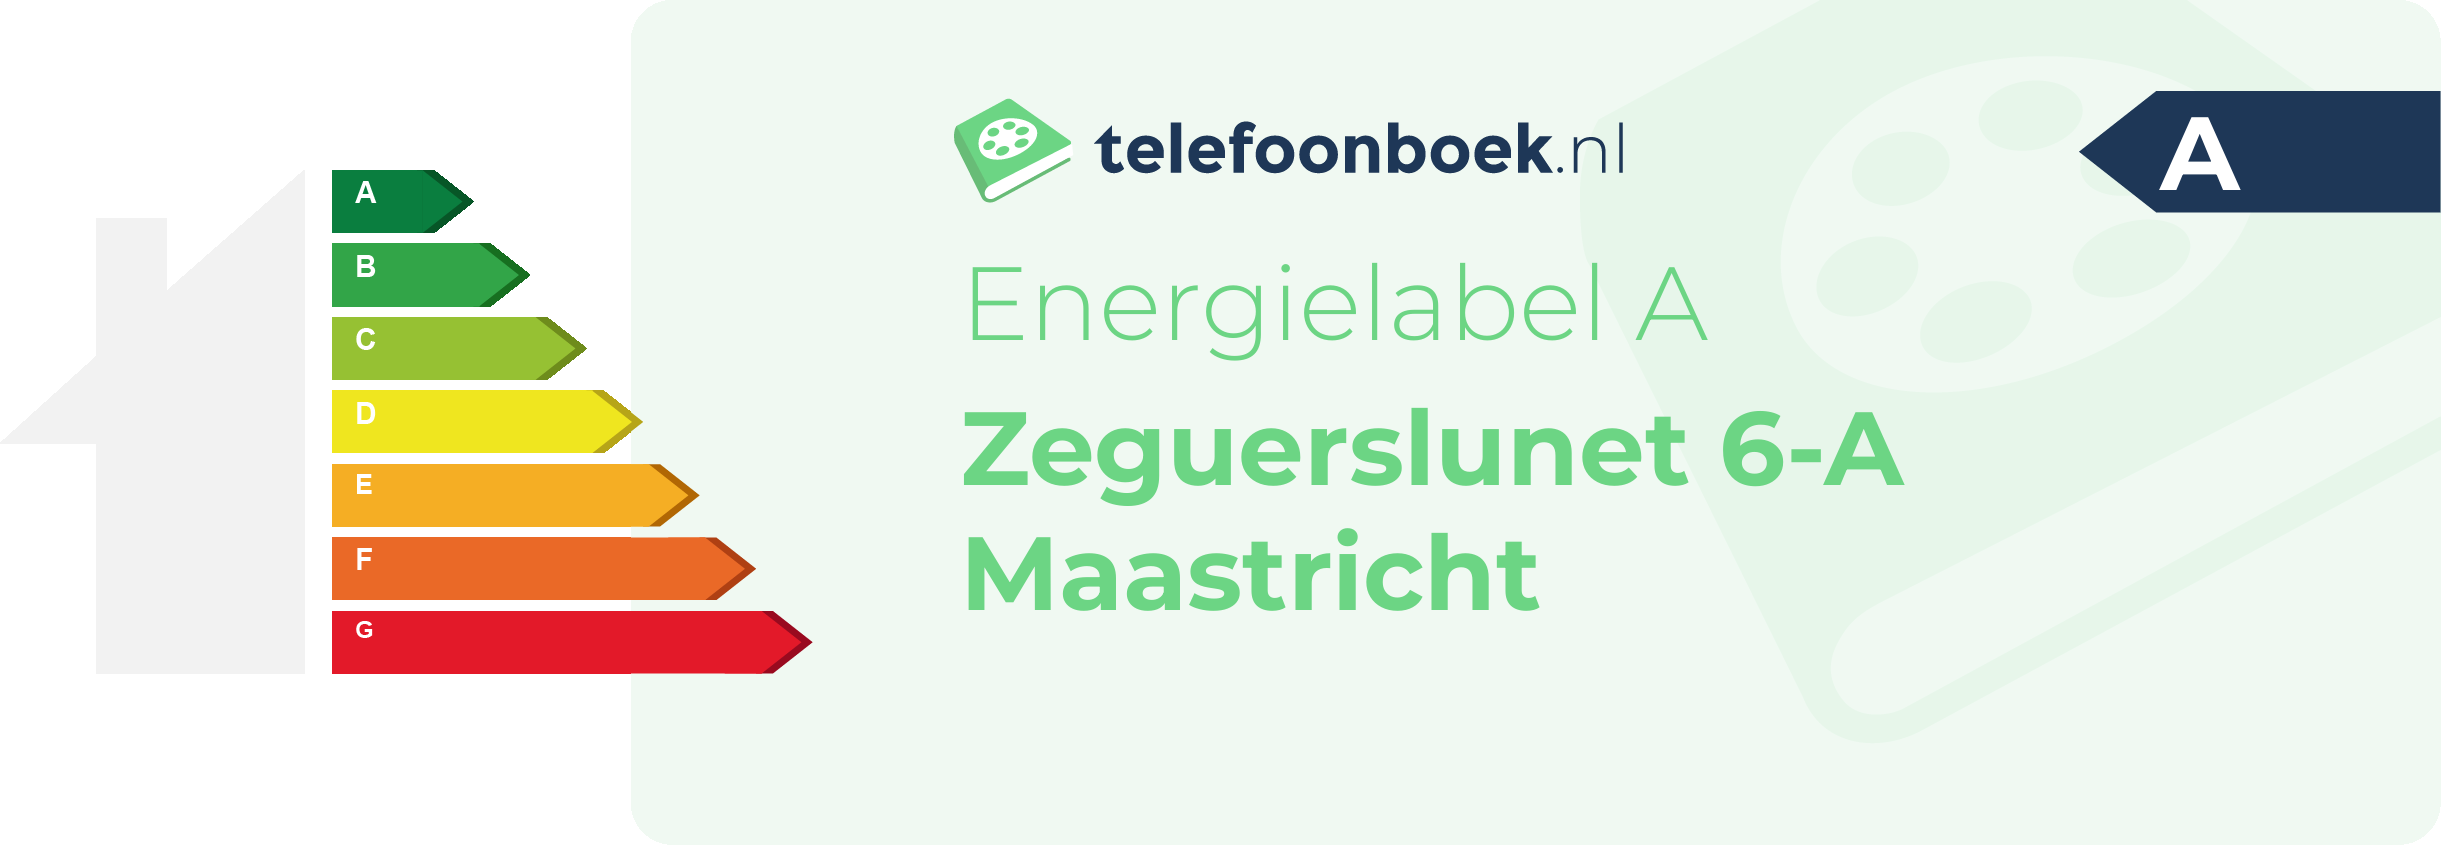 Energielabel Zeguerslunet 6-A Maastricht